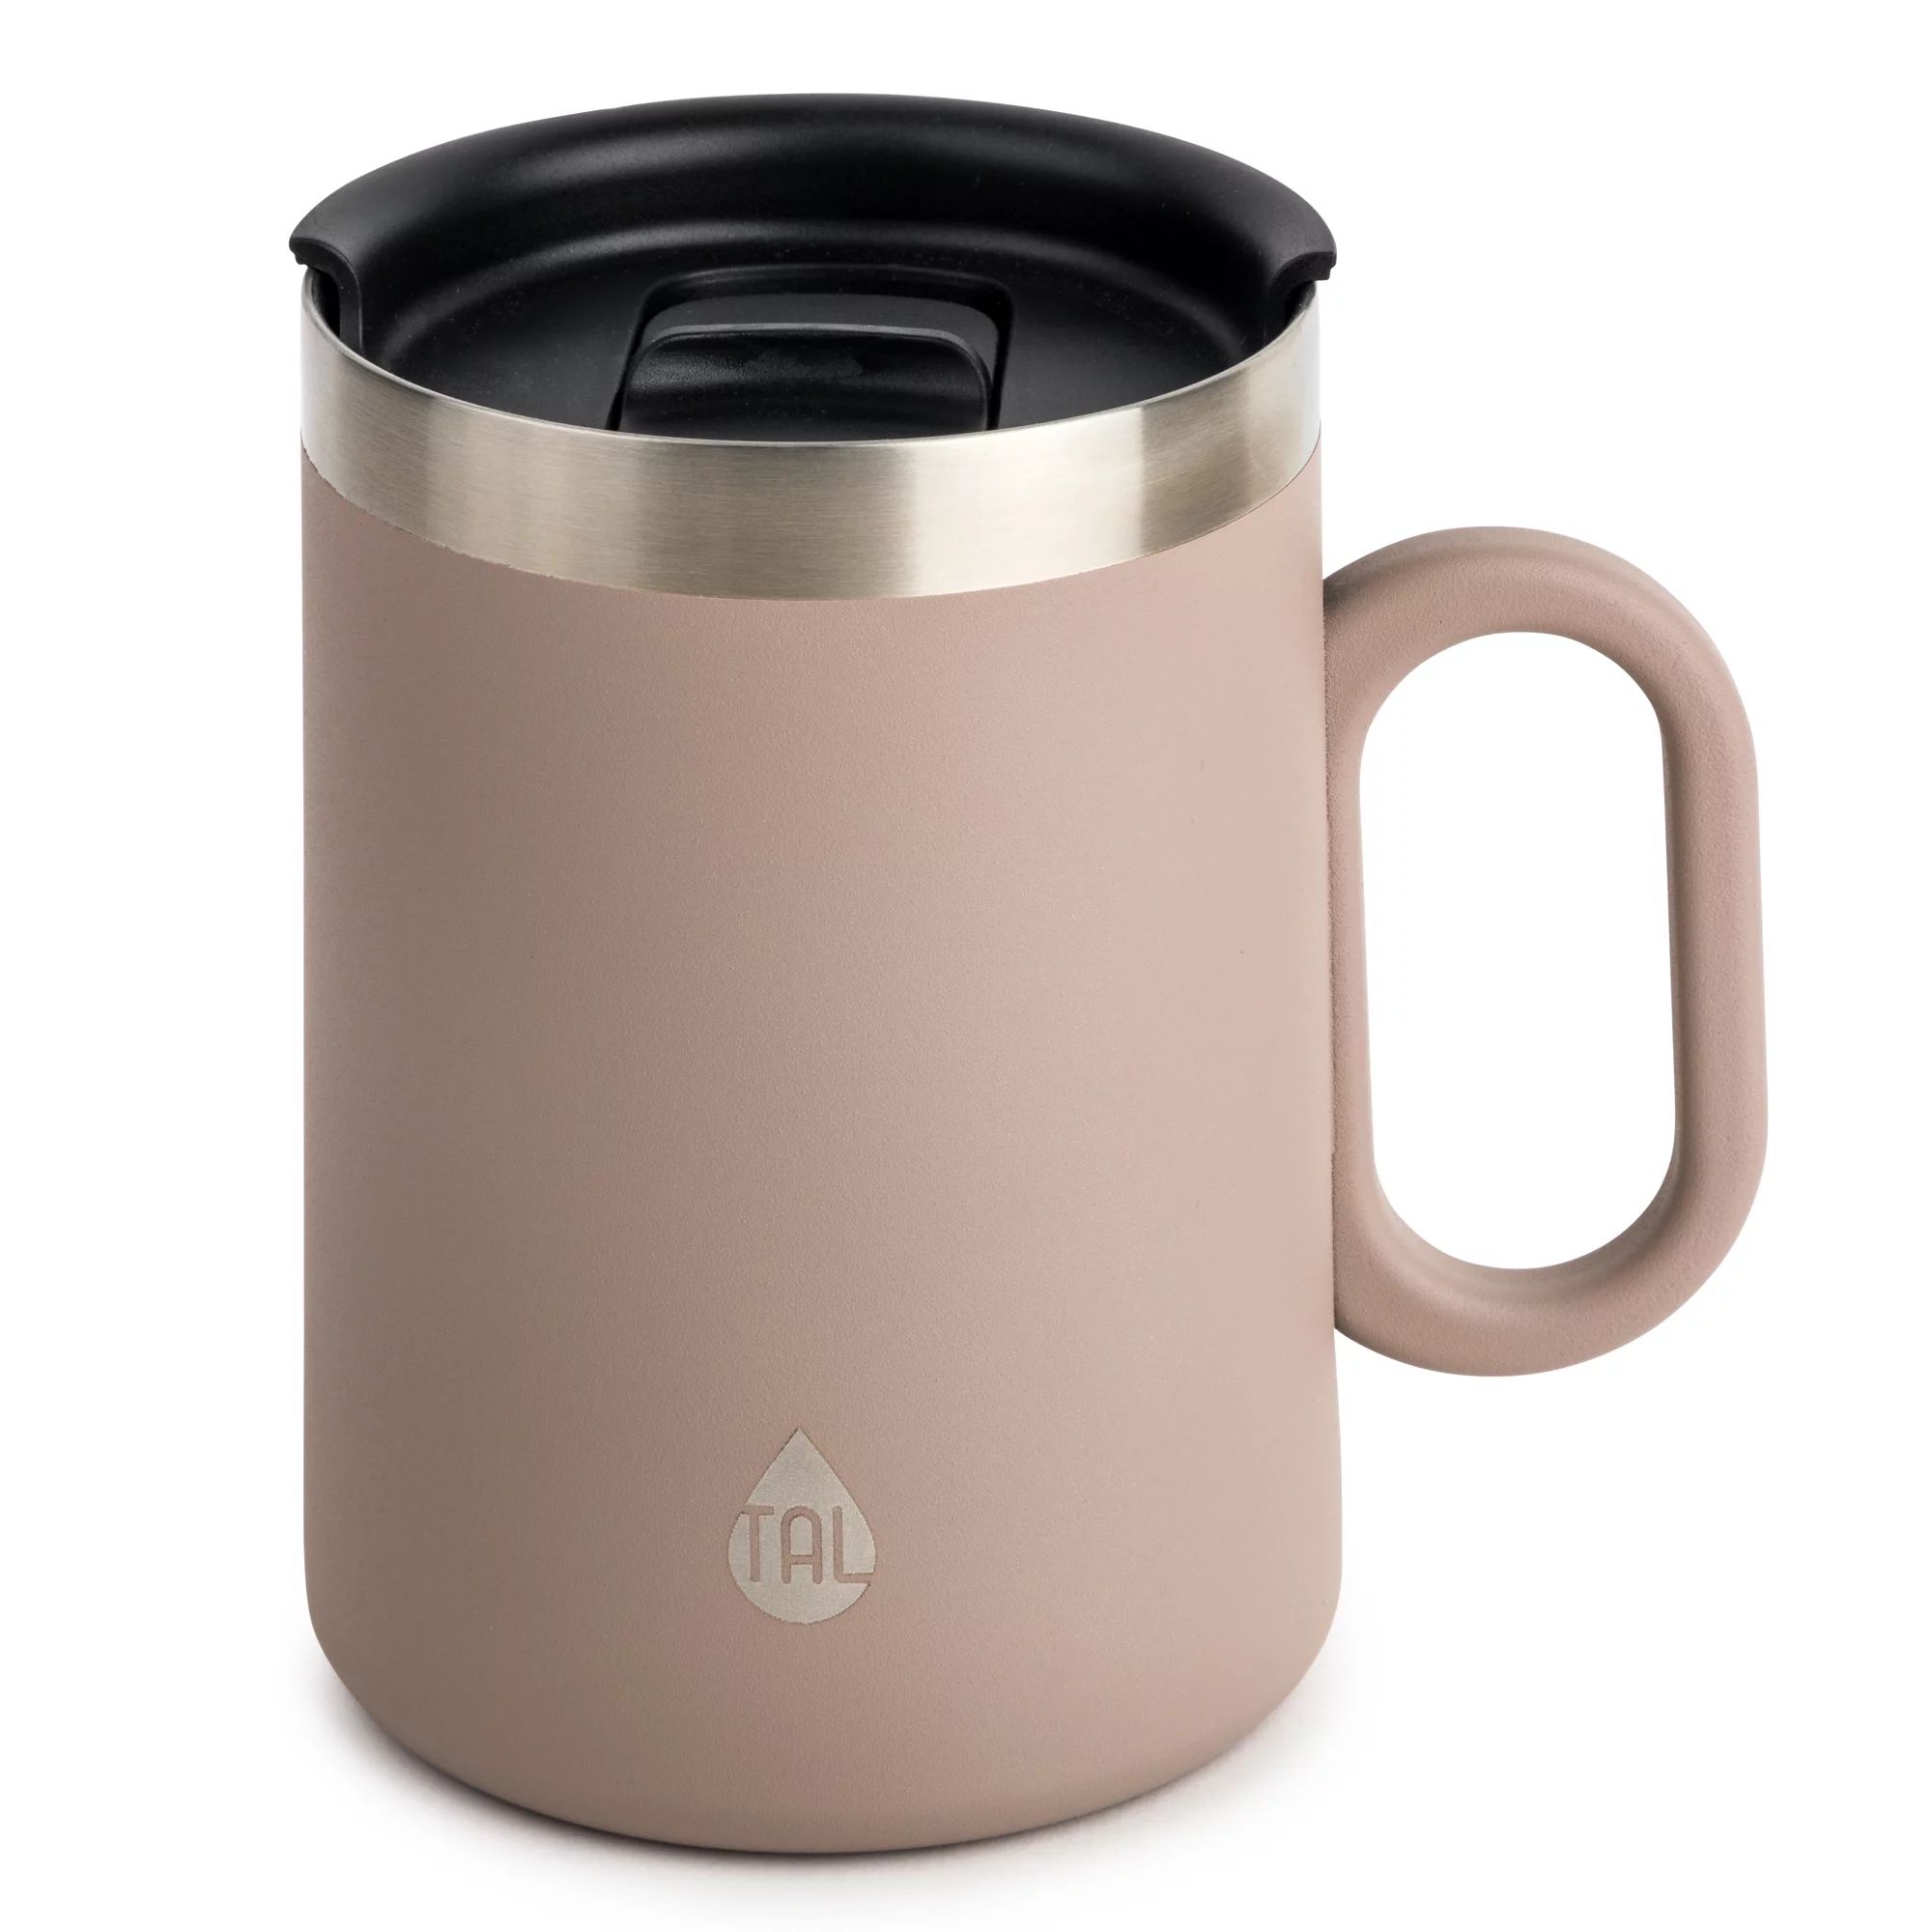 TAL Stainless Steel Brew Coffee Mug 15 fl oz, Taupe | Walmart (US)